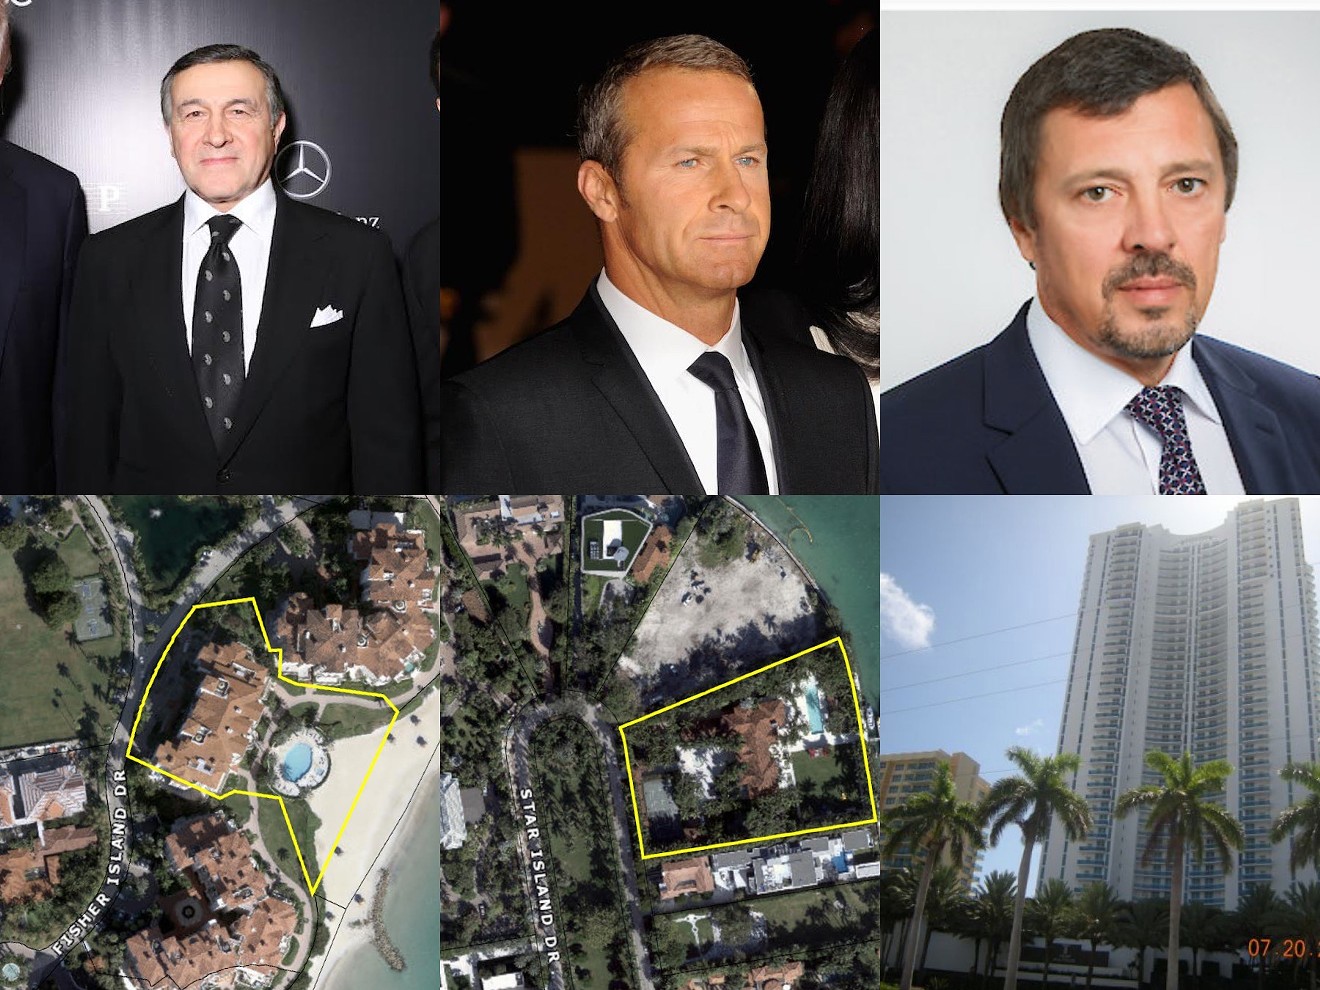 Aras Agalarov, Vladislav Doronin, and Oleg Misevra are tied to luxury residences in Miami Beach and Hollywood.